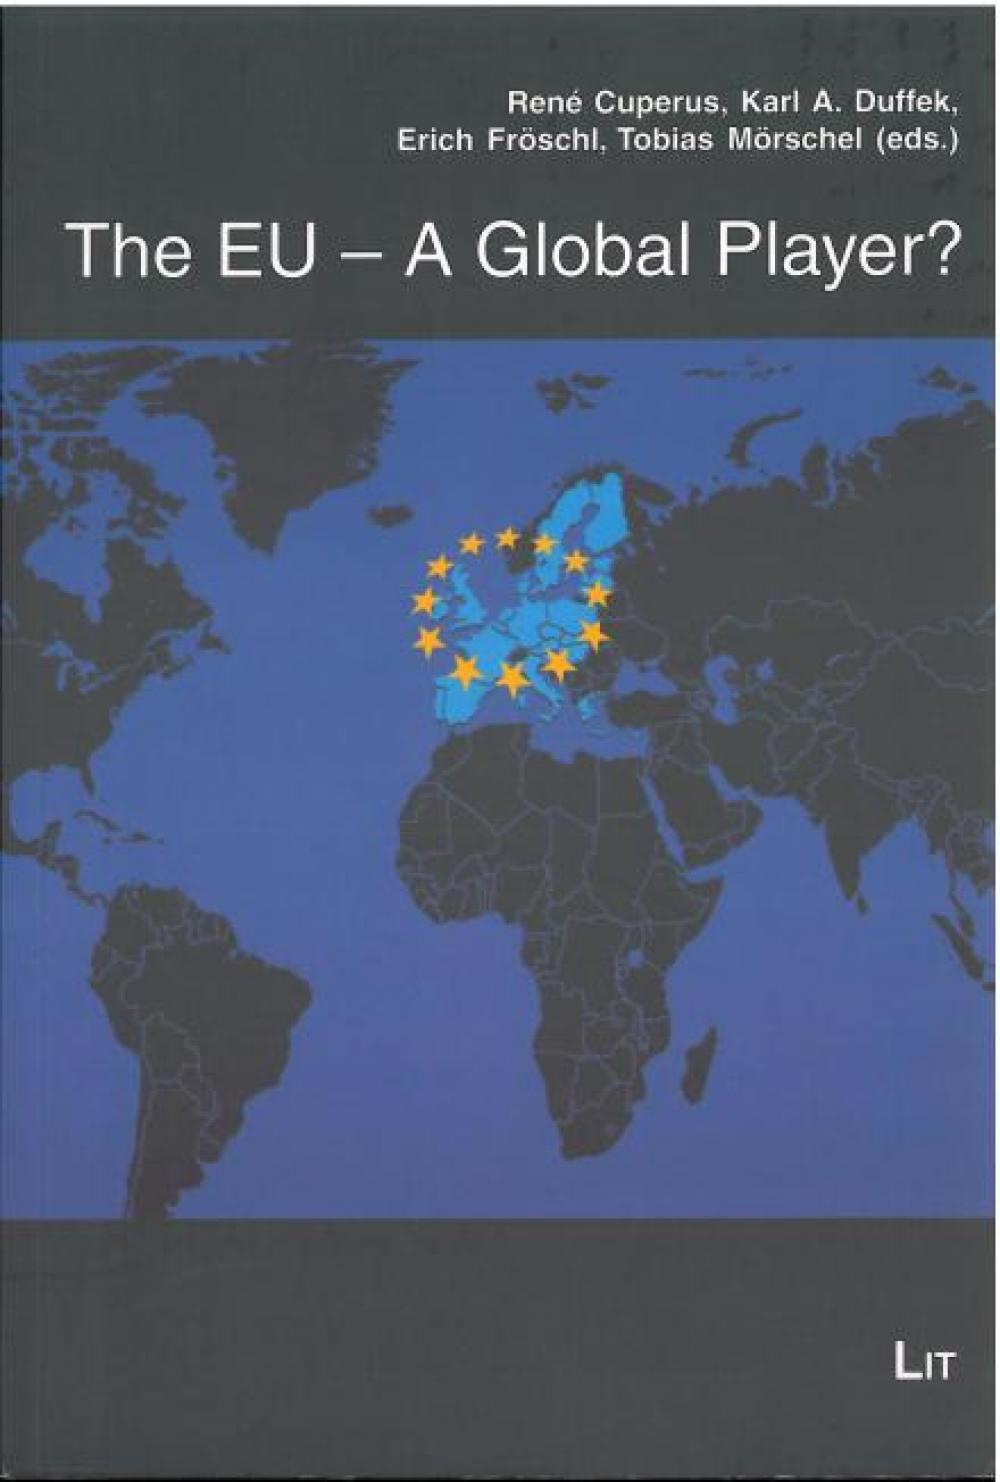 The EU - A Global Player?